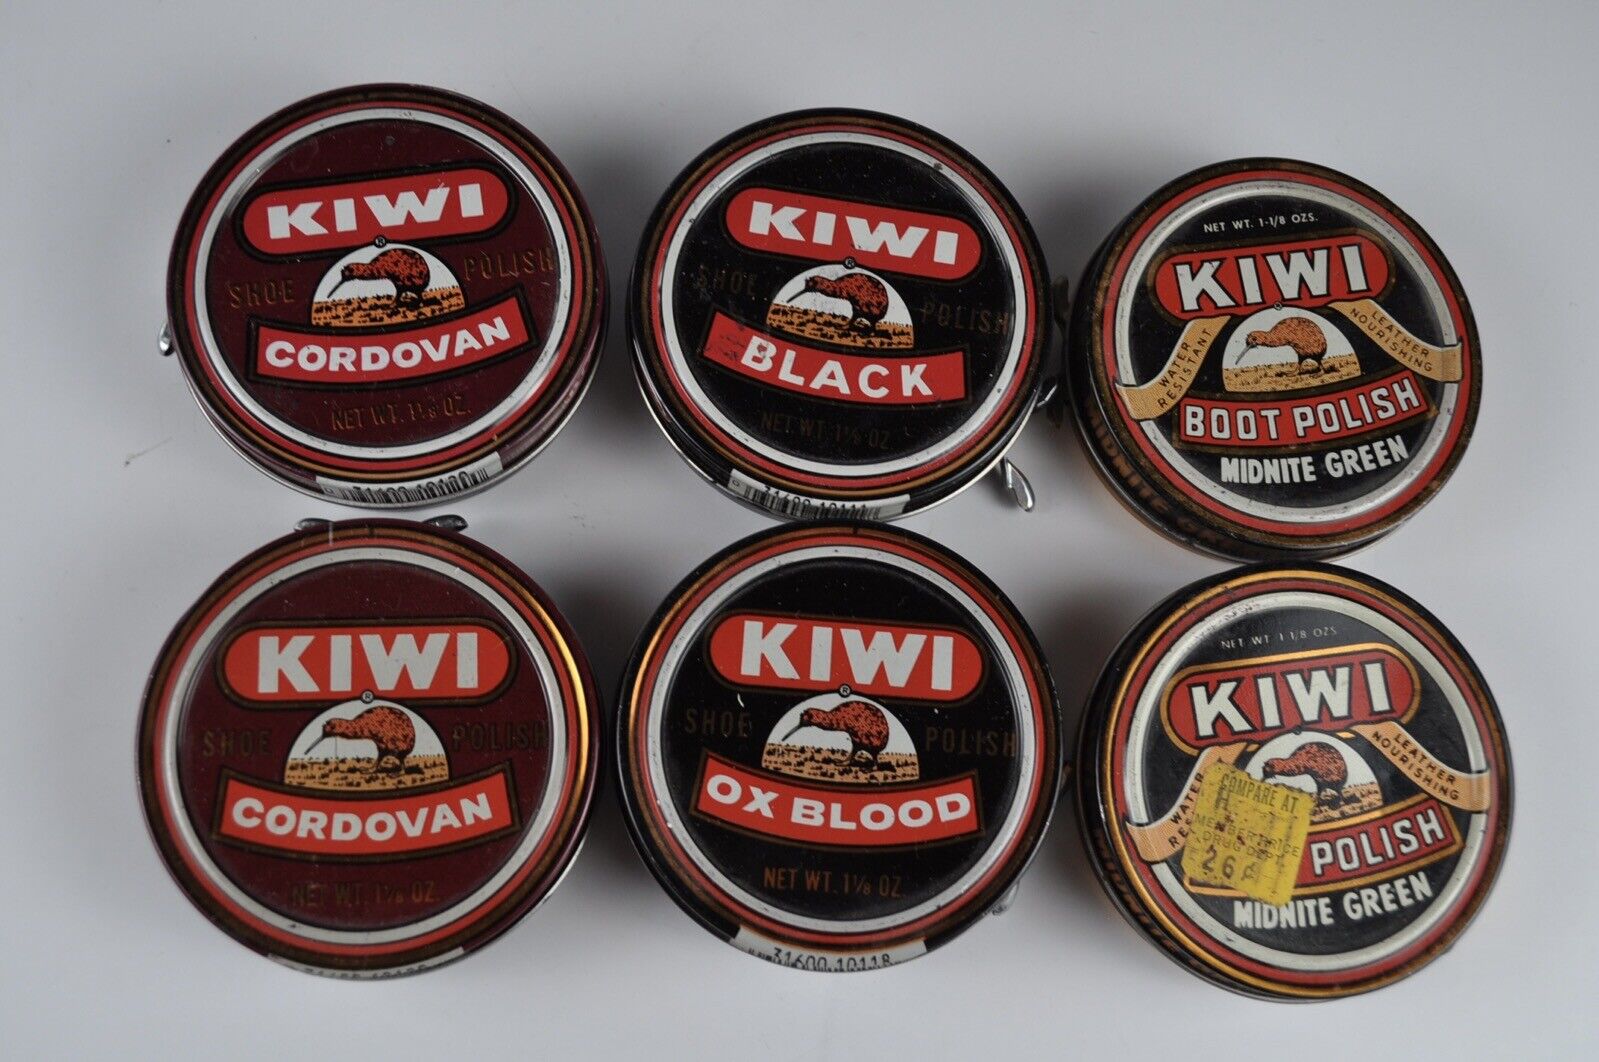 Vintage Kiwi Shoe Polish Tin 6 Cans - Cordovan, Ox Blood, Black & Midnite Green